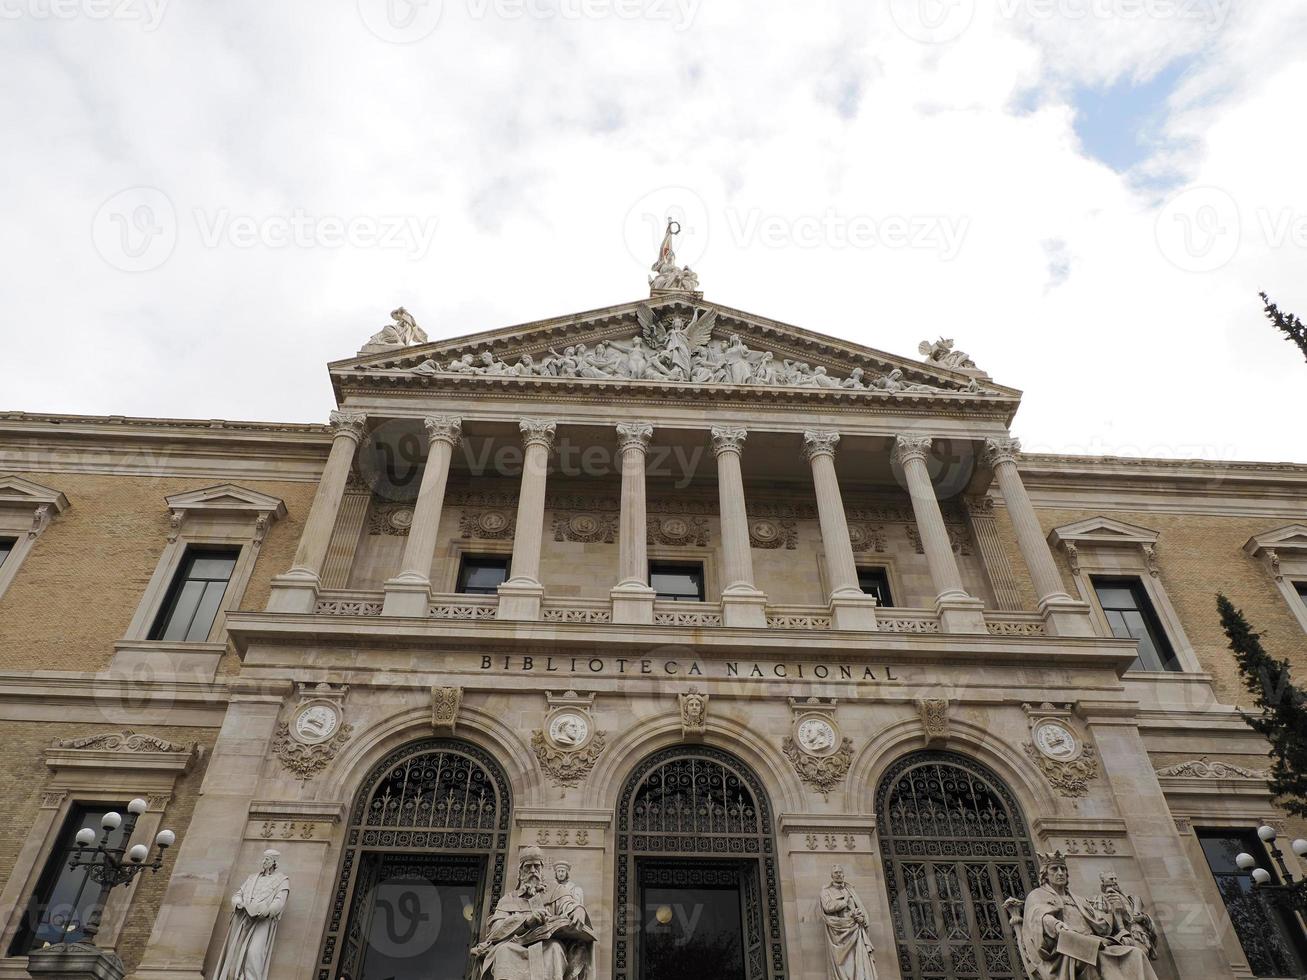 nationaal bibliotheek van Madrid, Spanje. architectuur en kunst foto